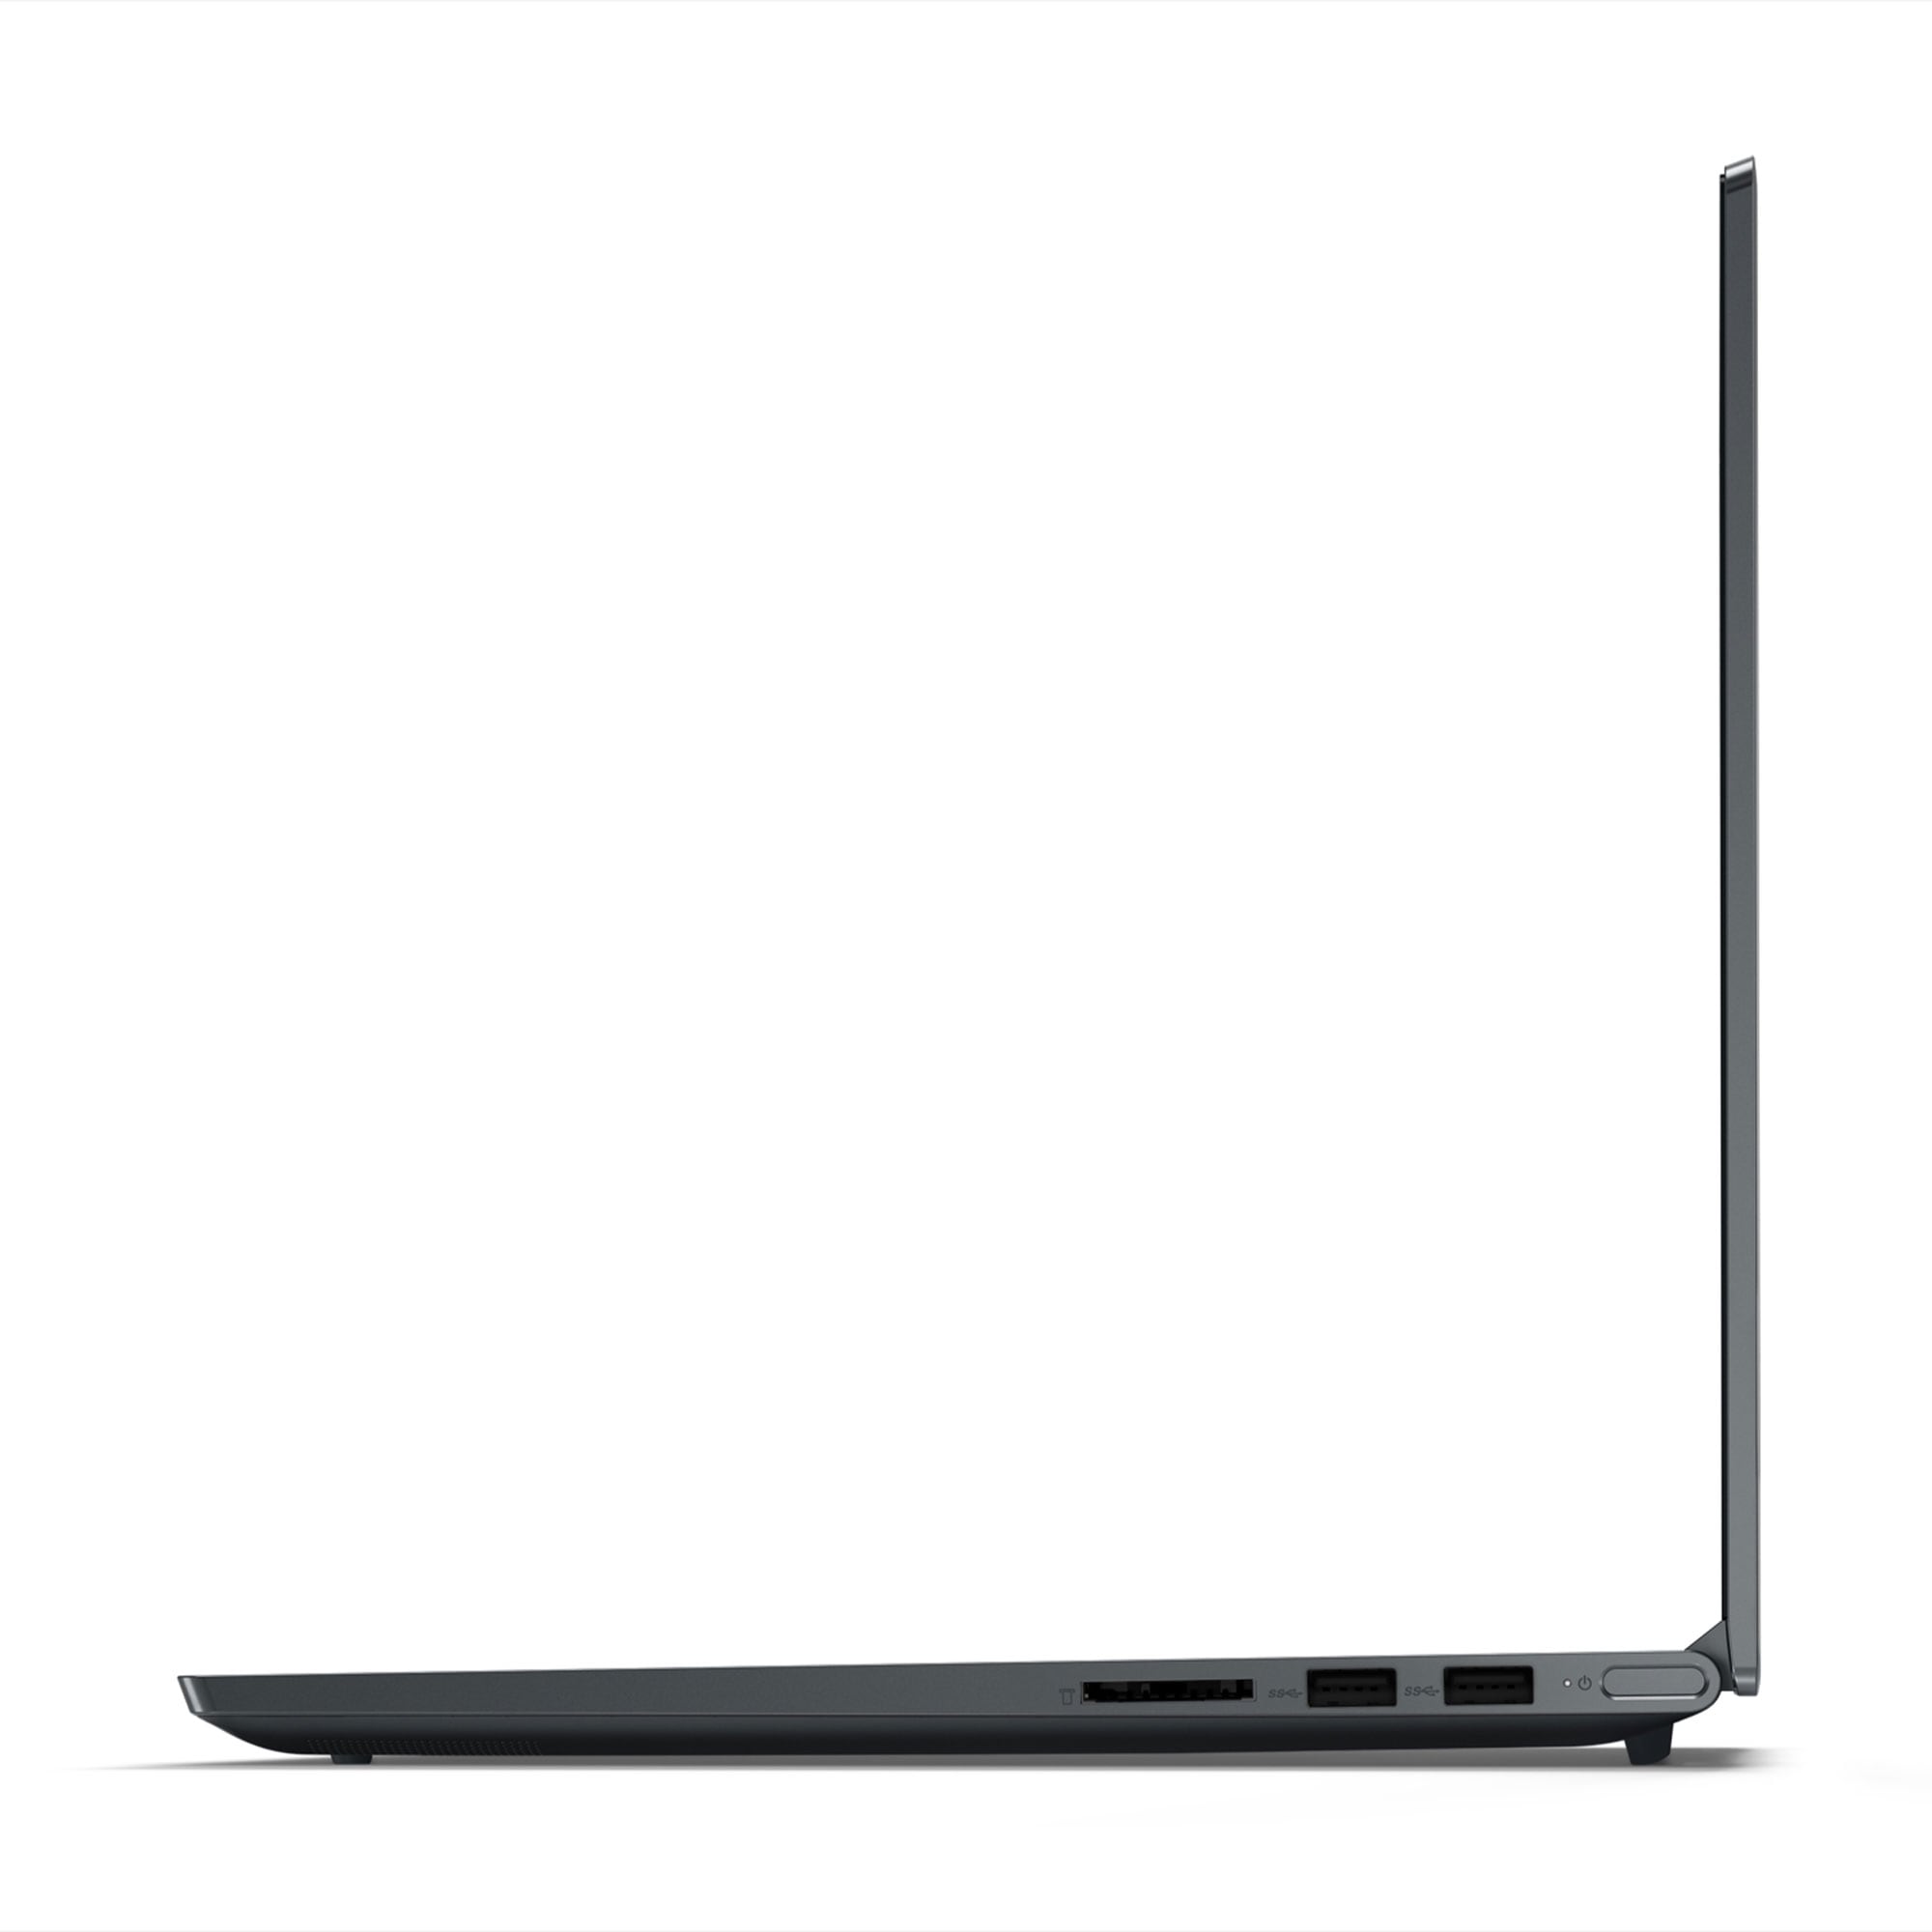 Lenovo IdeaPad Slim 7 GTX Laptop, 15.6" FHD IPS  300 nits, i5-10300H,  GeForce GTX 1650 4GB, 16GB, 1TB SSD, Win 10 Home - image 4 of 5